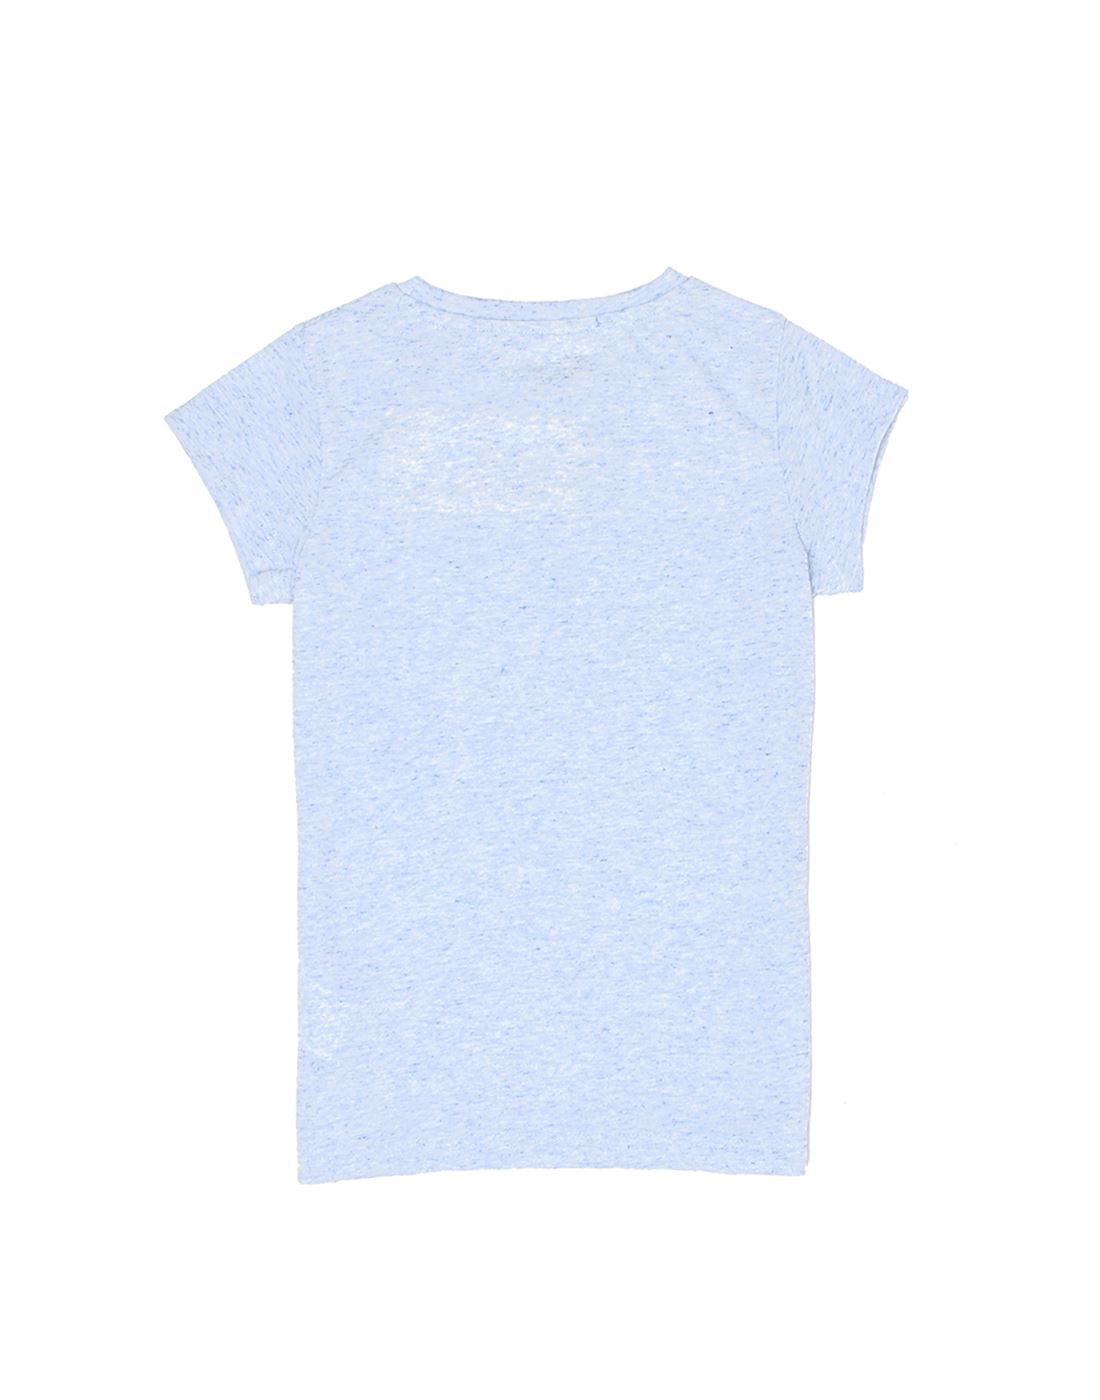 | Pepe Girls 121688 Graphic Print Blue Jeans | Blue T-Shirt